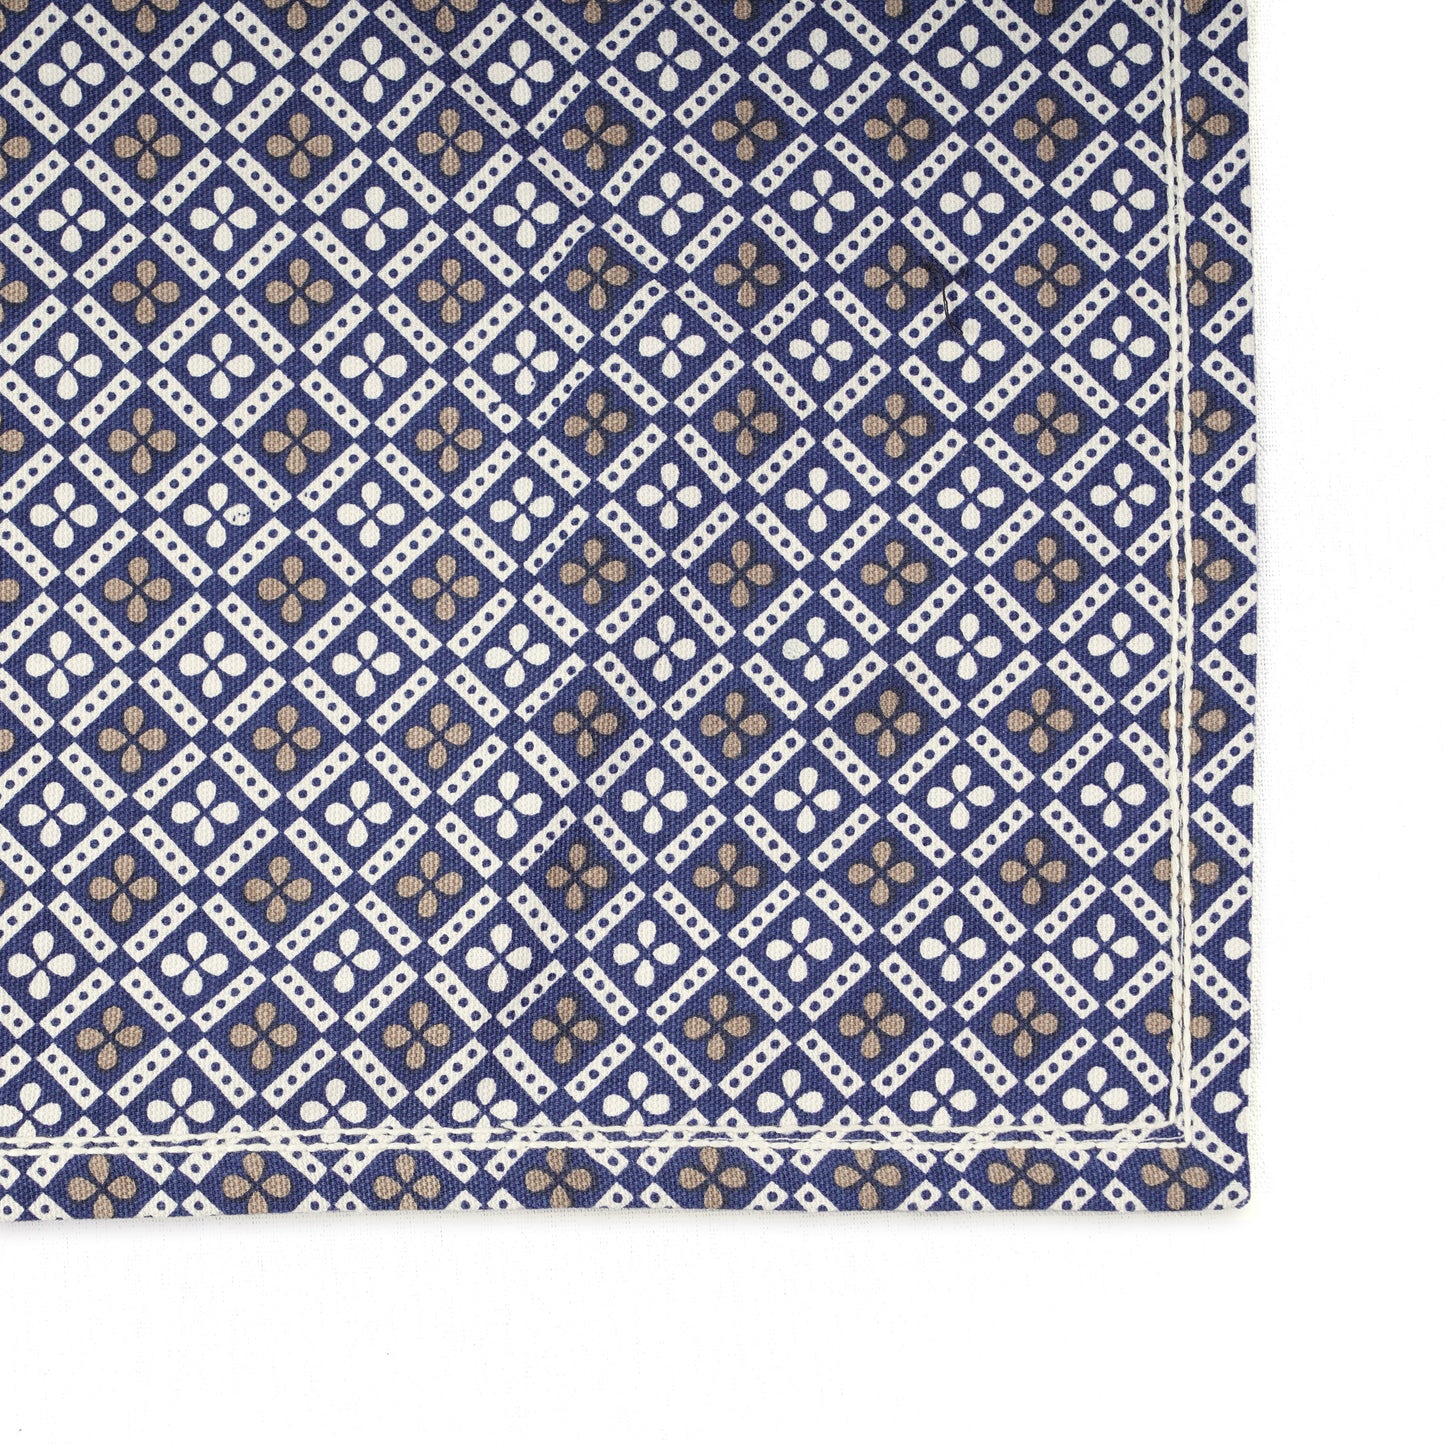 DOMINOTERIE Indigo Blue Printed Kitchen Towel, geometrical pattern, 100% cotton, size 20"X28"